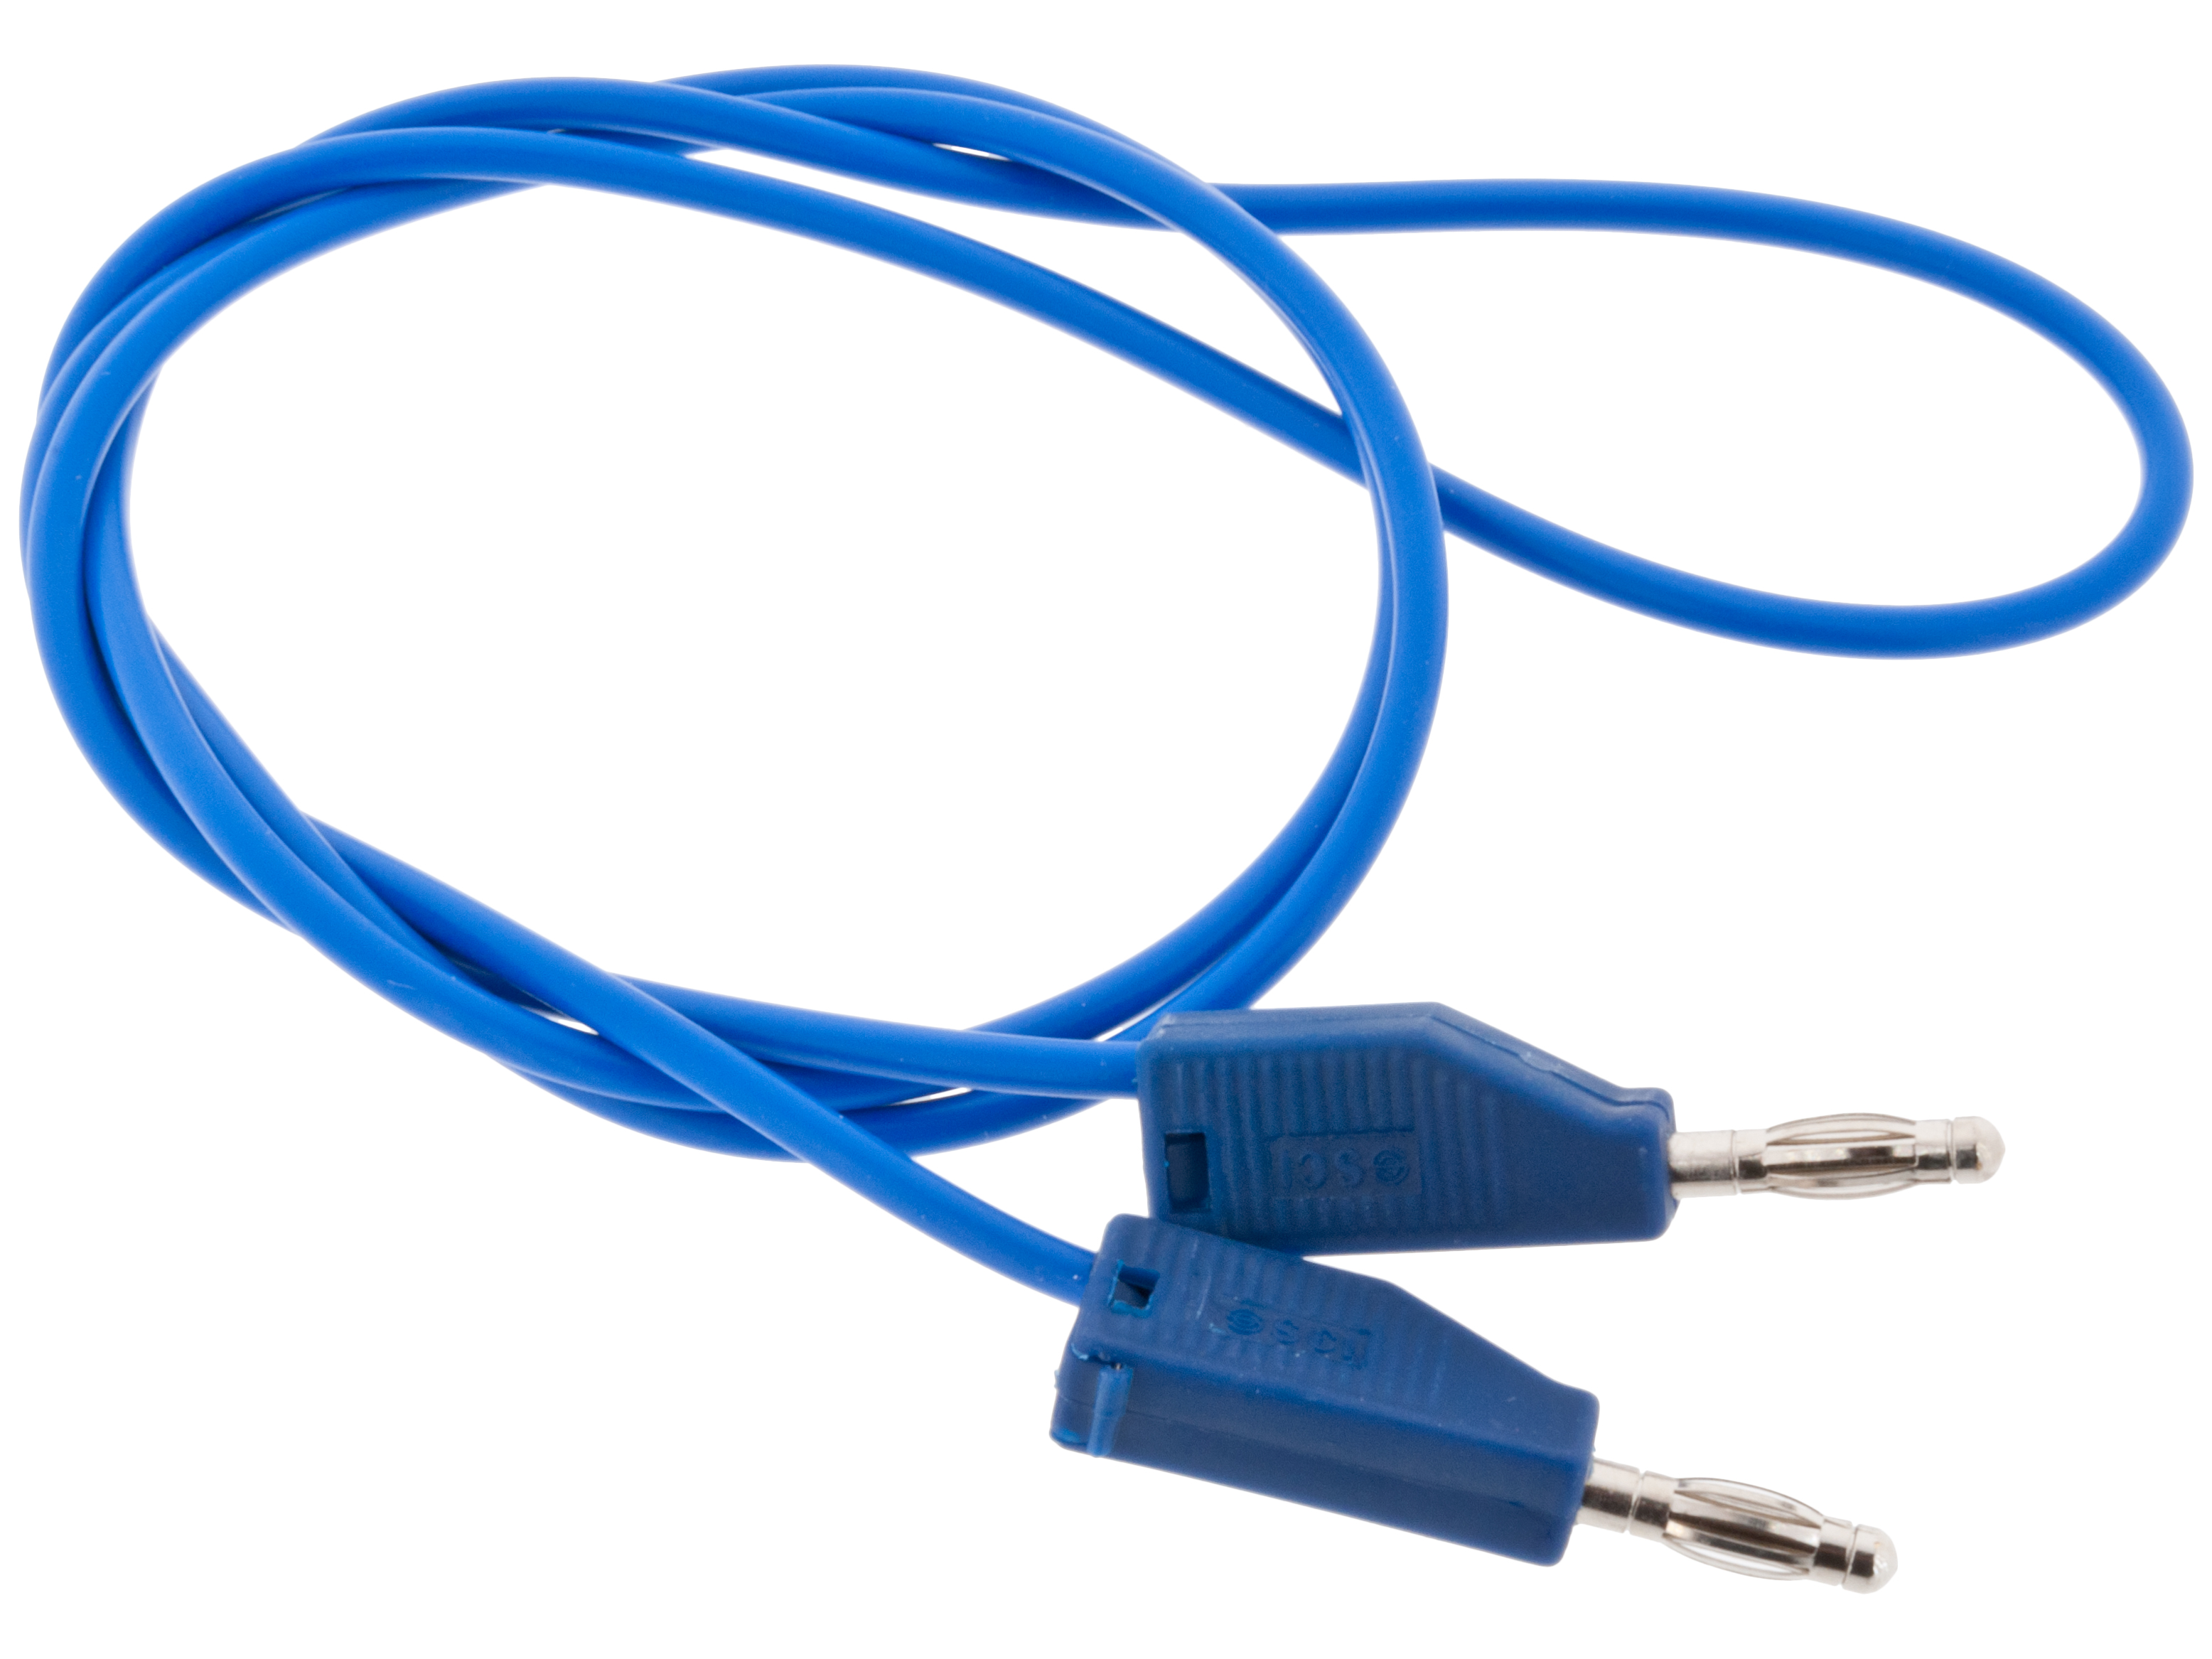 BANANA Cable Blue 1M